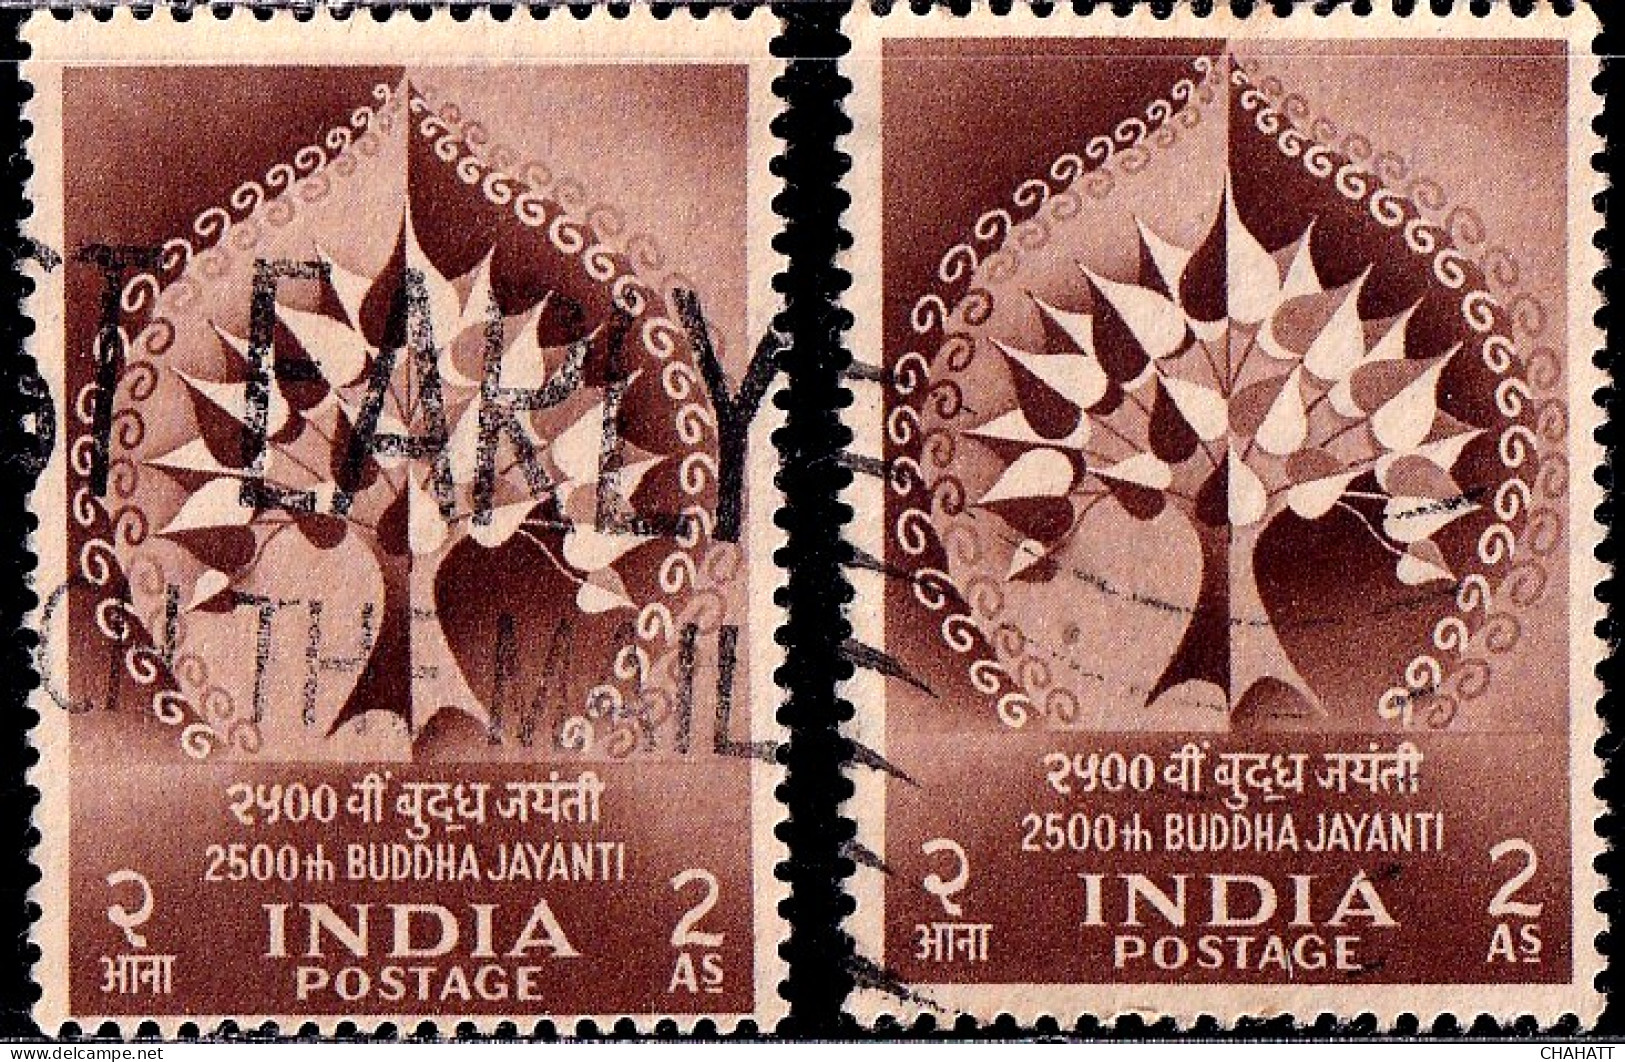 INDIA-1956-PRE DECIMAL- 2 ANNA-BUDDHISM - BODHI TREE- ERROR- FRAME SHIFTED- FU- IE-23 - Variétés Et Curiosités